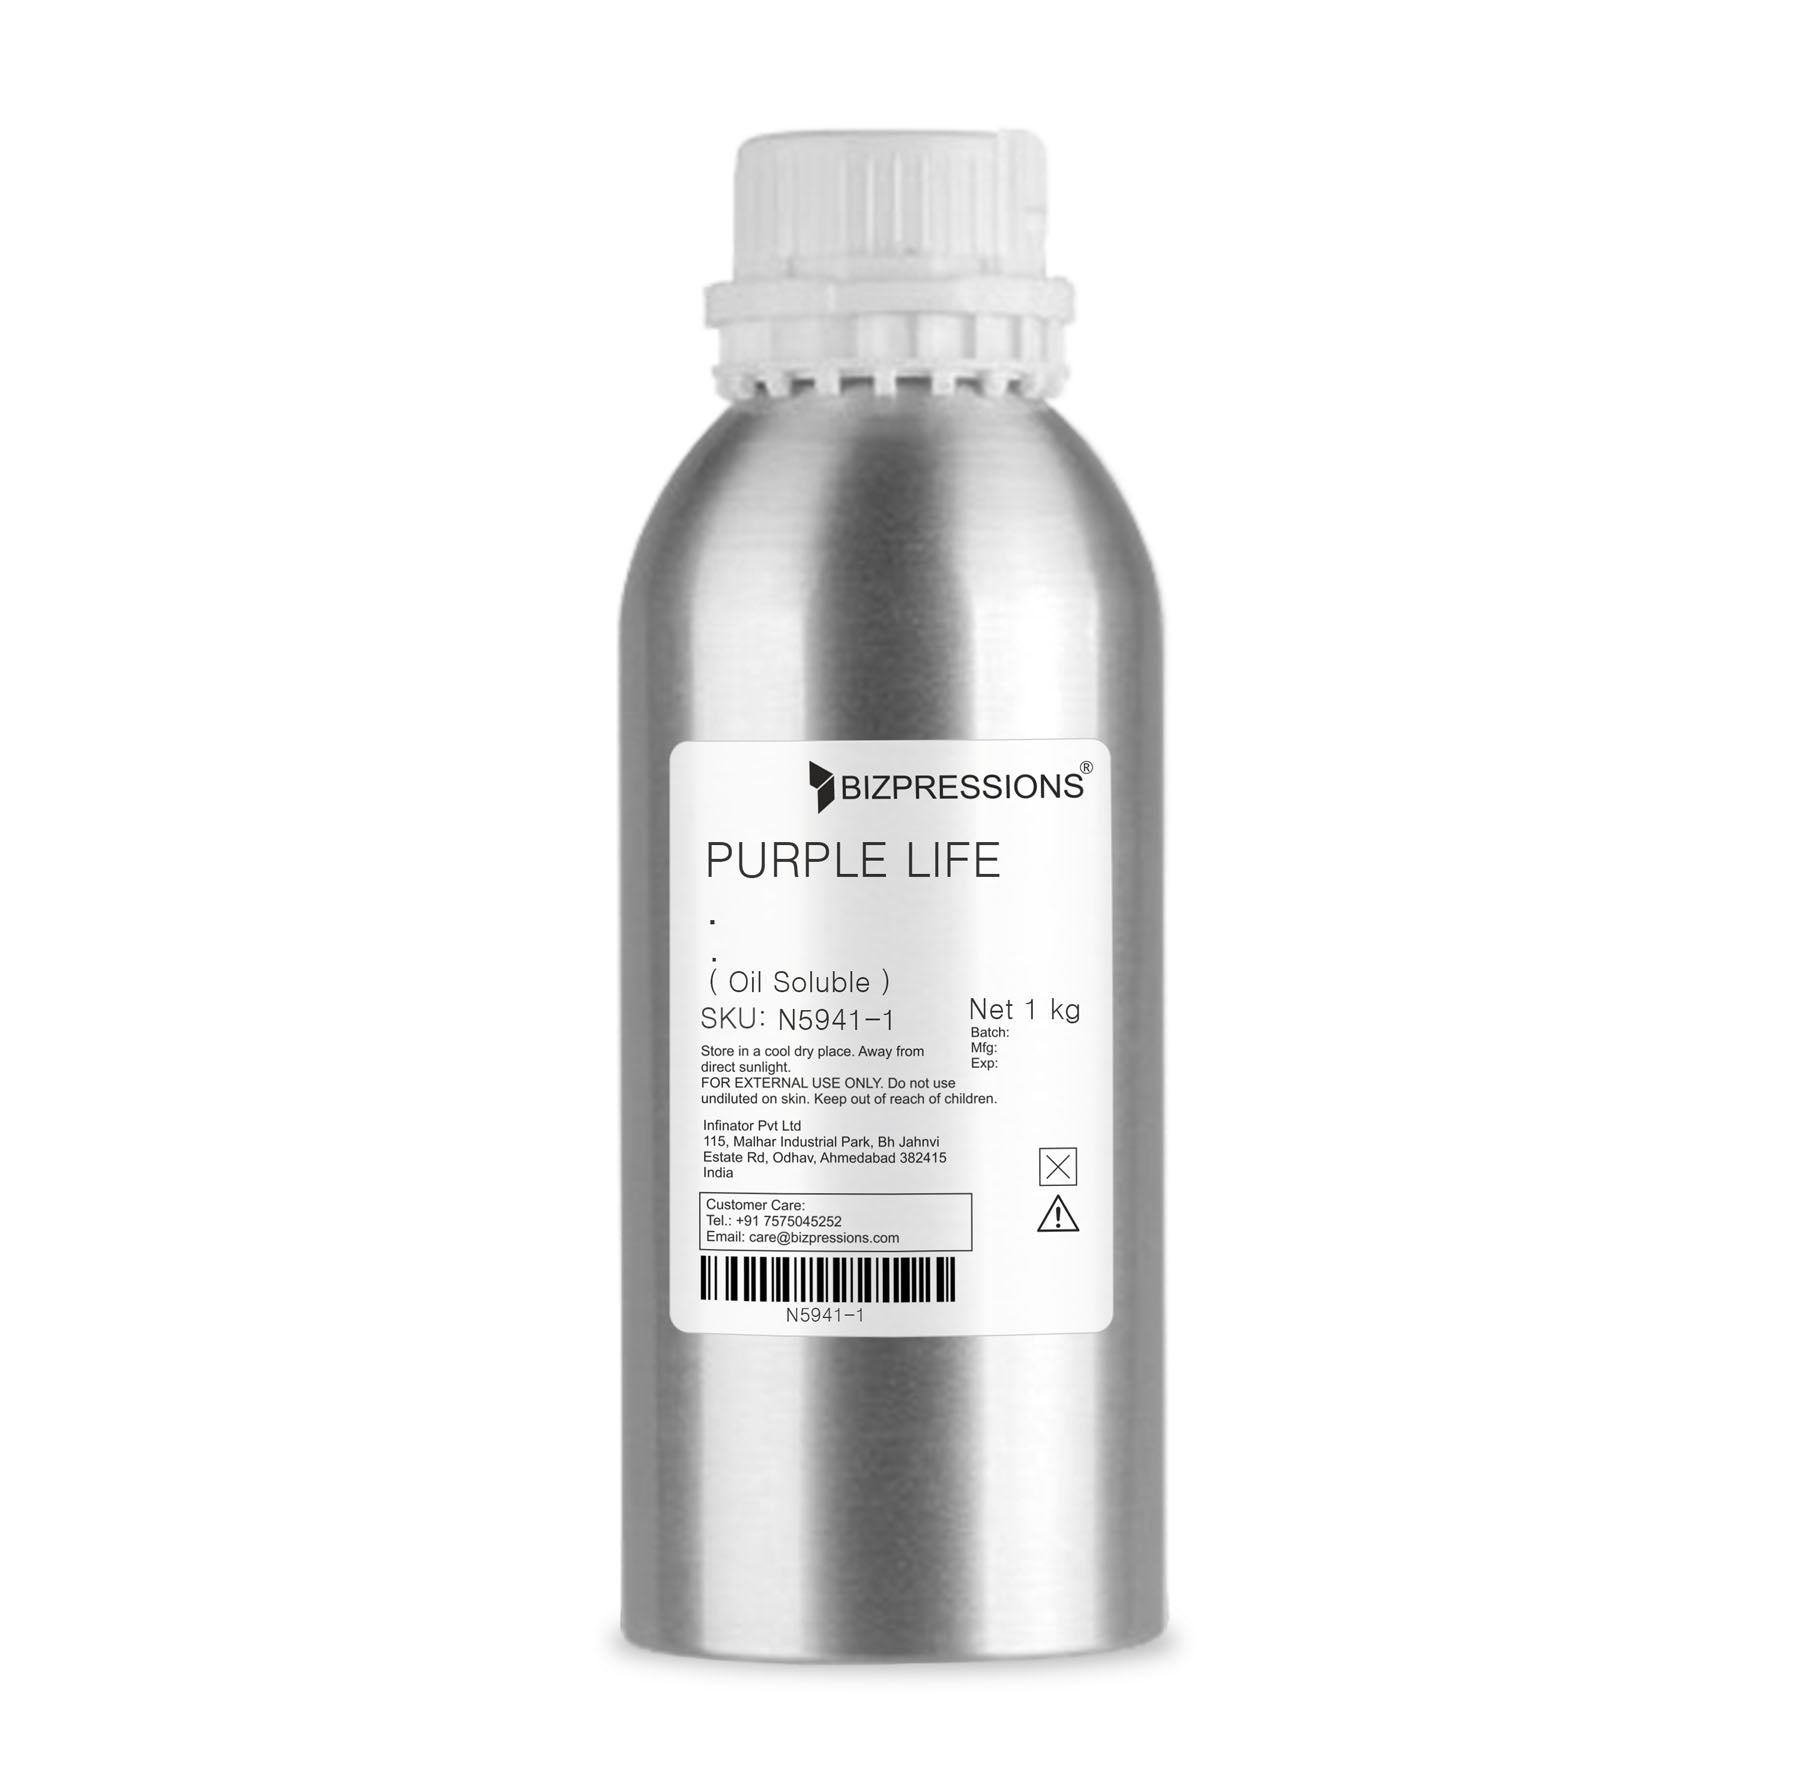 PURPLE LIFE - Fragrance ( Oil Soluble ) - 1 kg